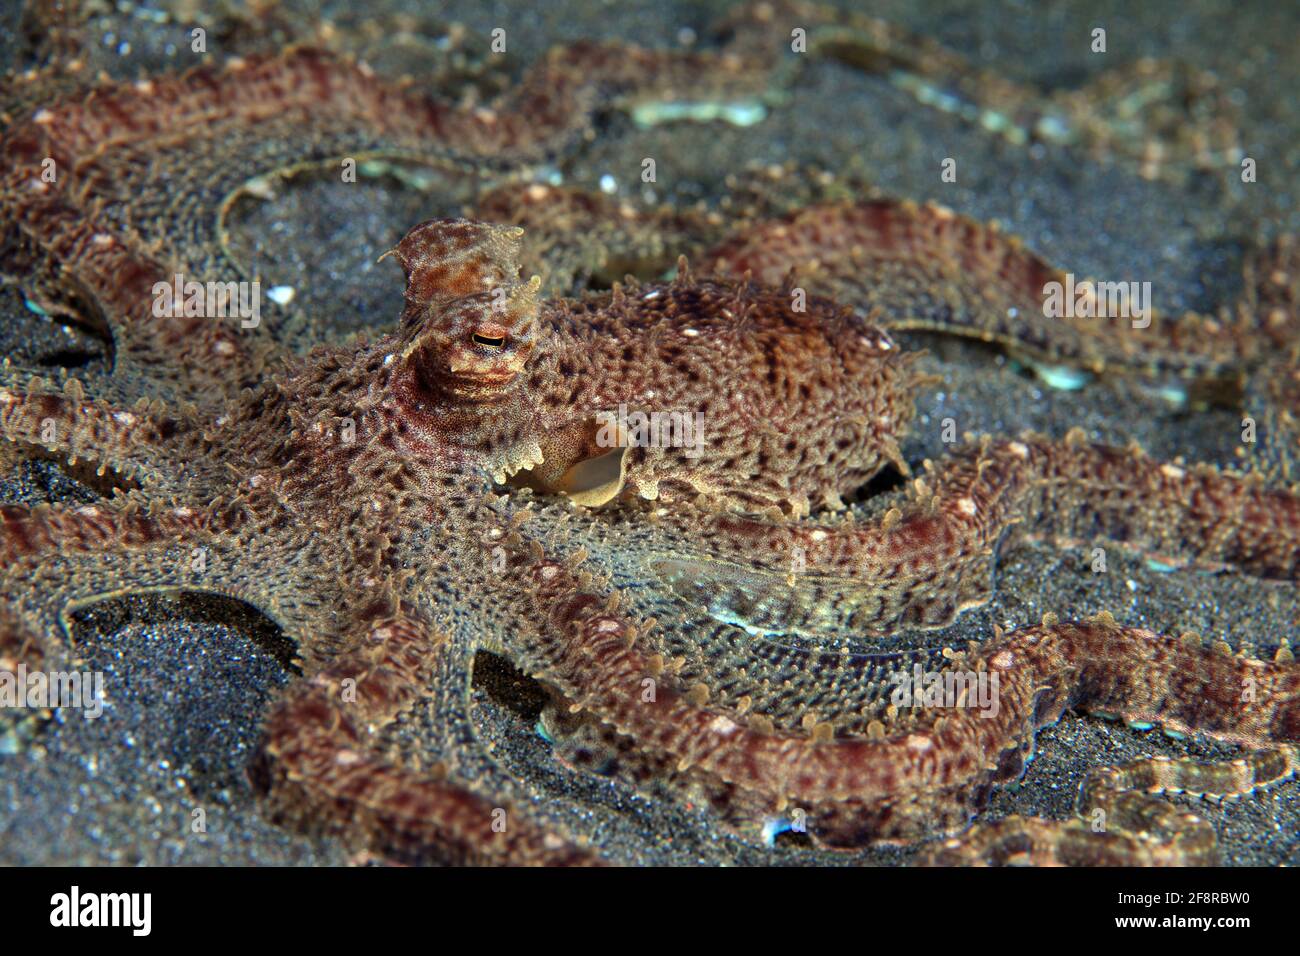 Mimikrykrake (Taumoctopus mimicus) am Sandgrund (Lembeh, Sulawesi, Indonesien) - imita el pulpo (Lembeh, Sulawesi, Indonesia) Foto de stock